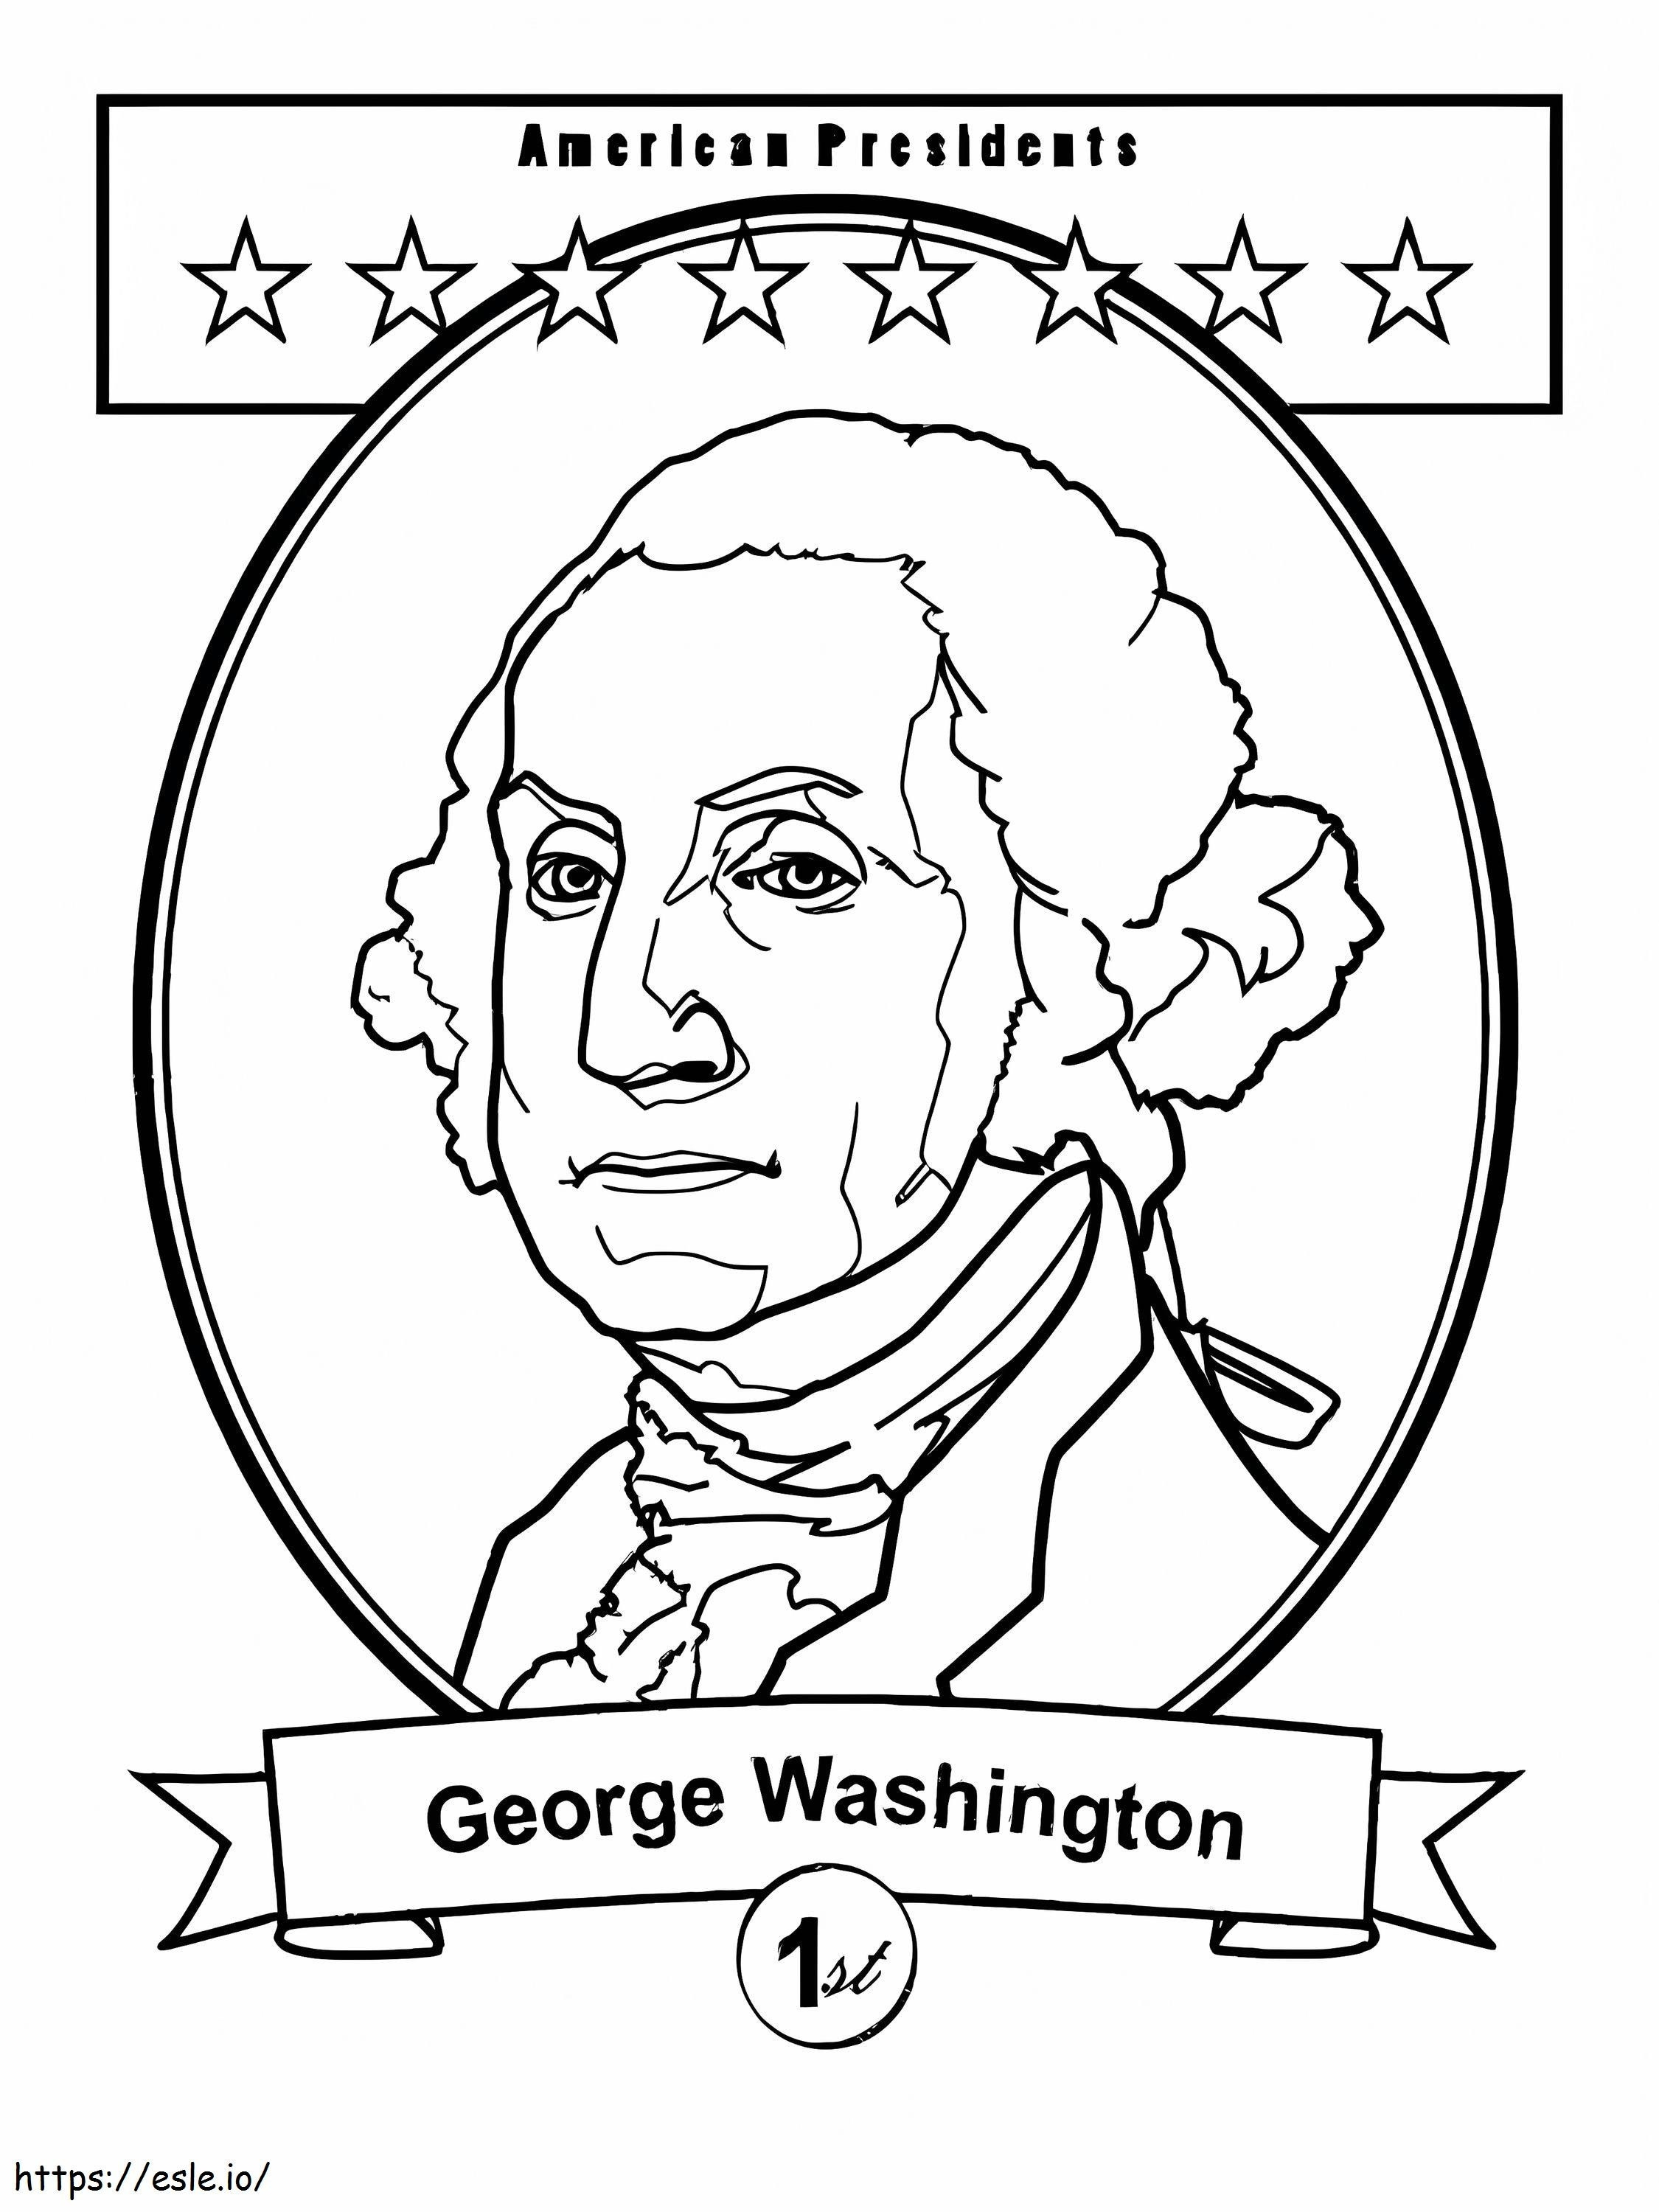 George Washington 9 coloring page